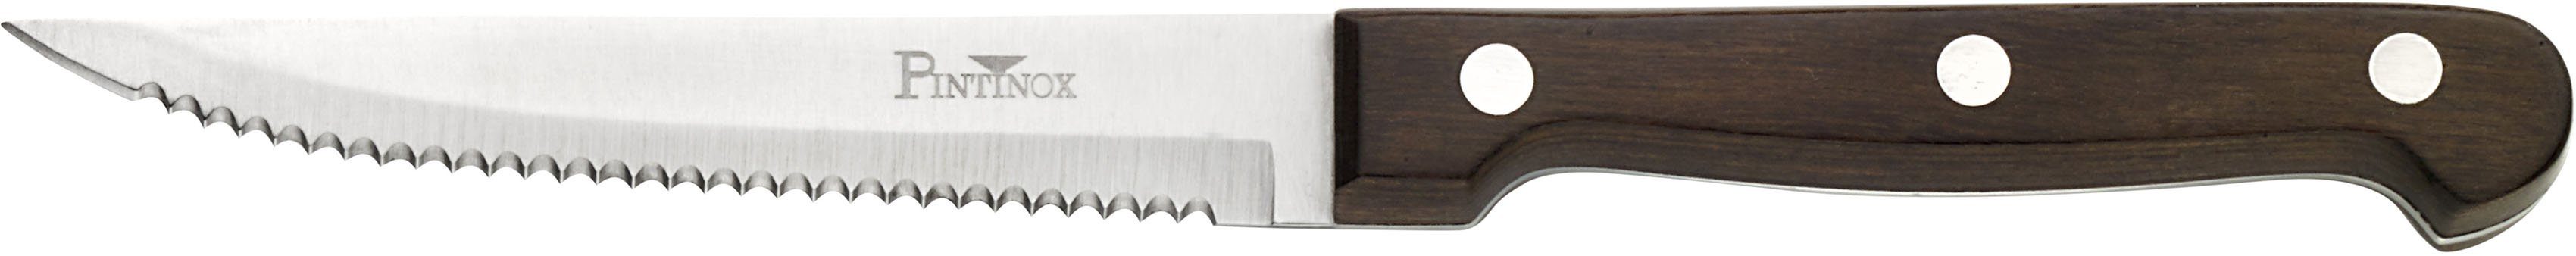 PINTINOX Grillpfanne Chalet, Aluminium 4 Steakmesser inkl. 5-tlg), cm, Induktionsgeeignet, 28x28 (Set